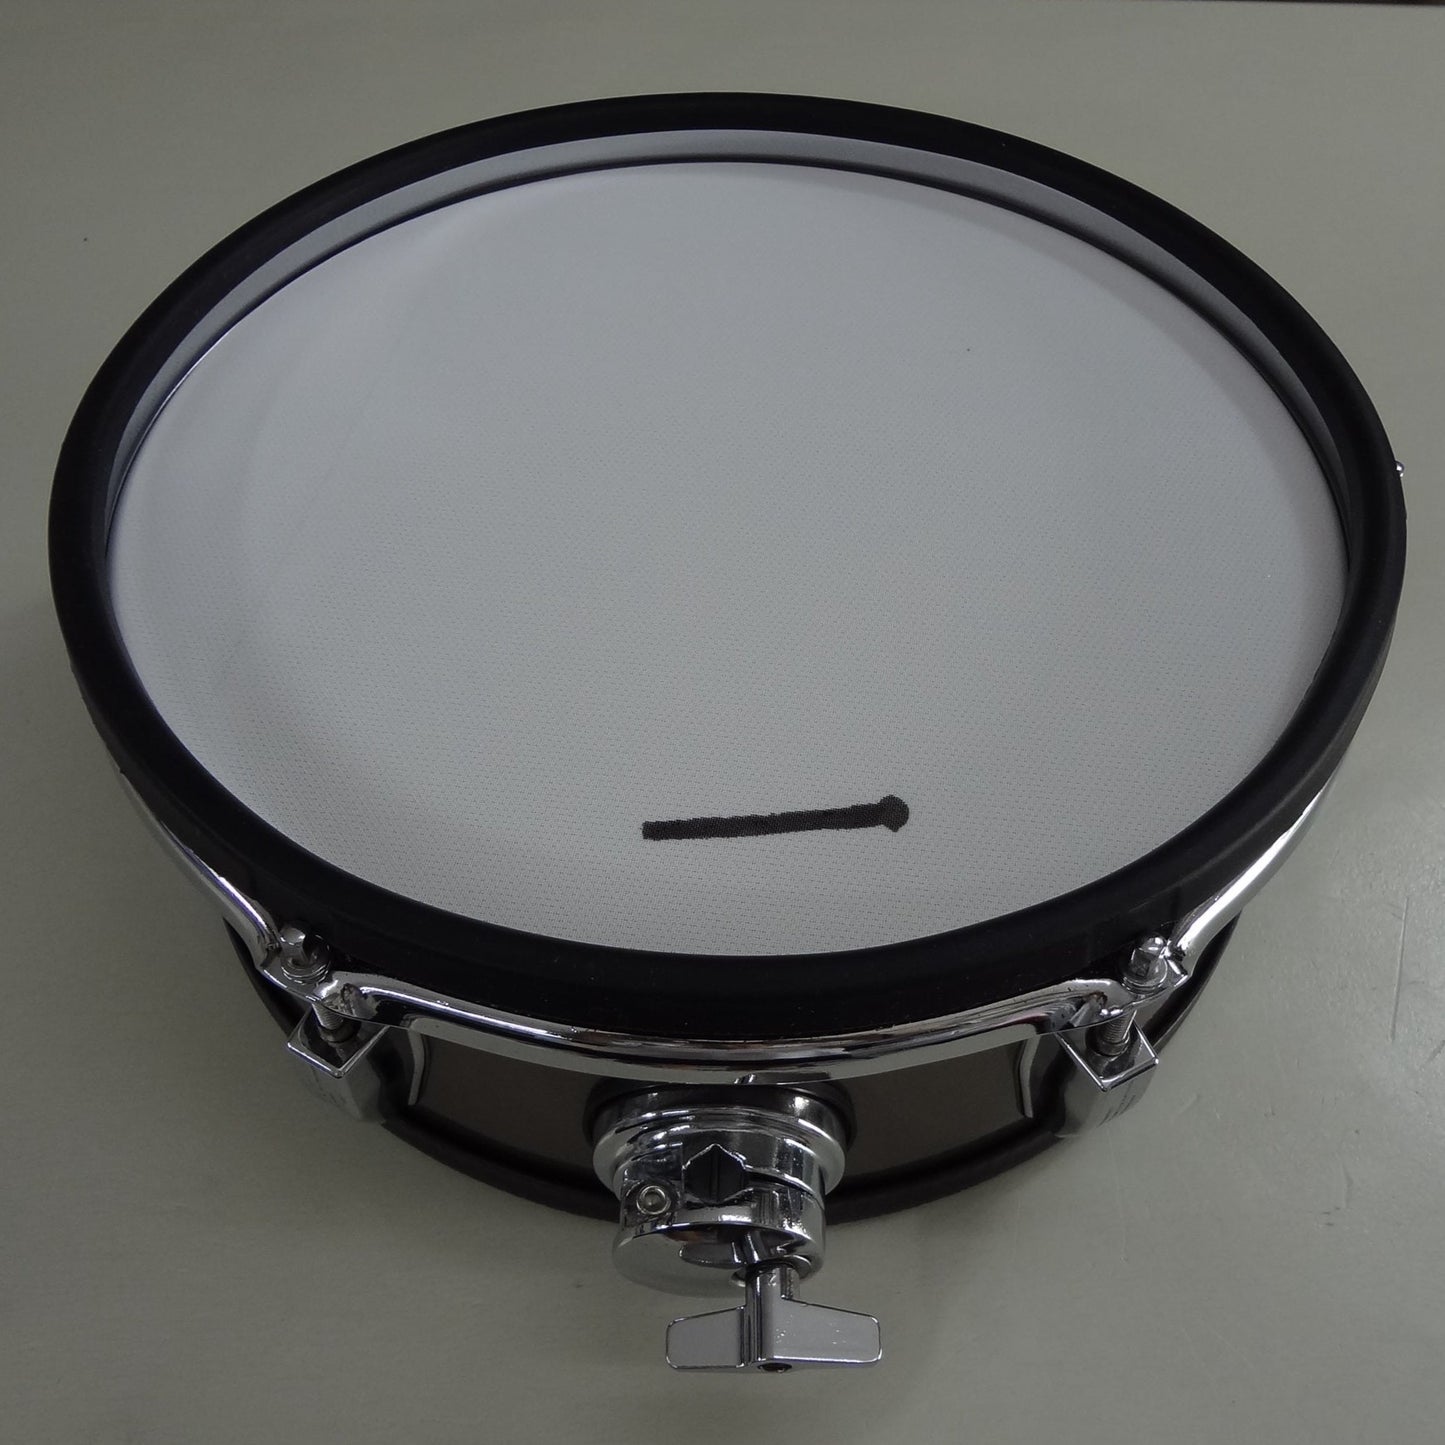 Refurbished 12 Inch Custom Built Electronic Snare Drum - Bronze Metallic